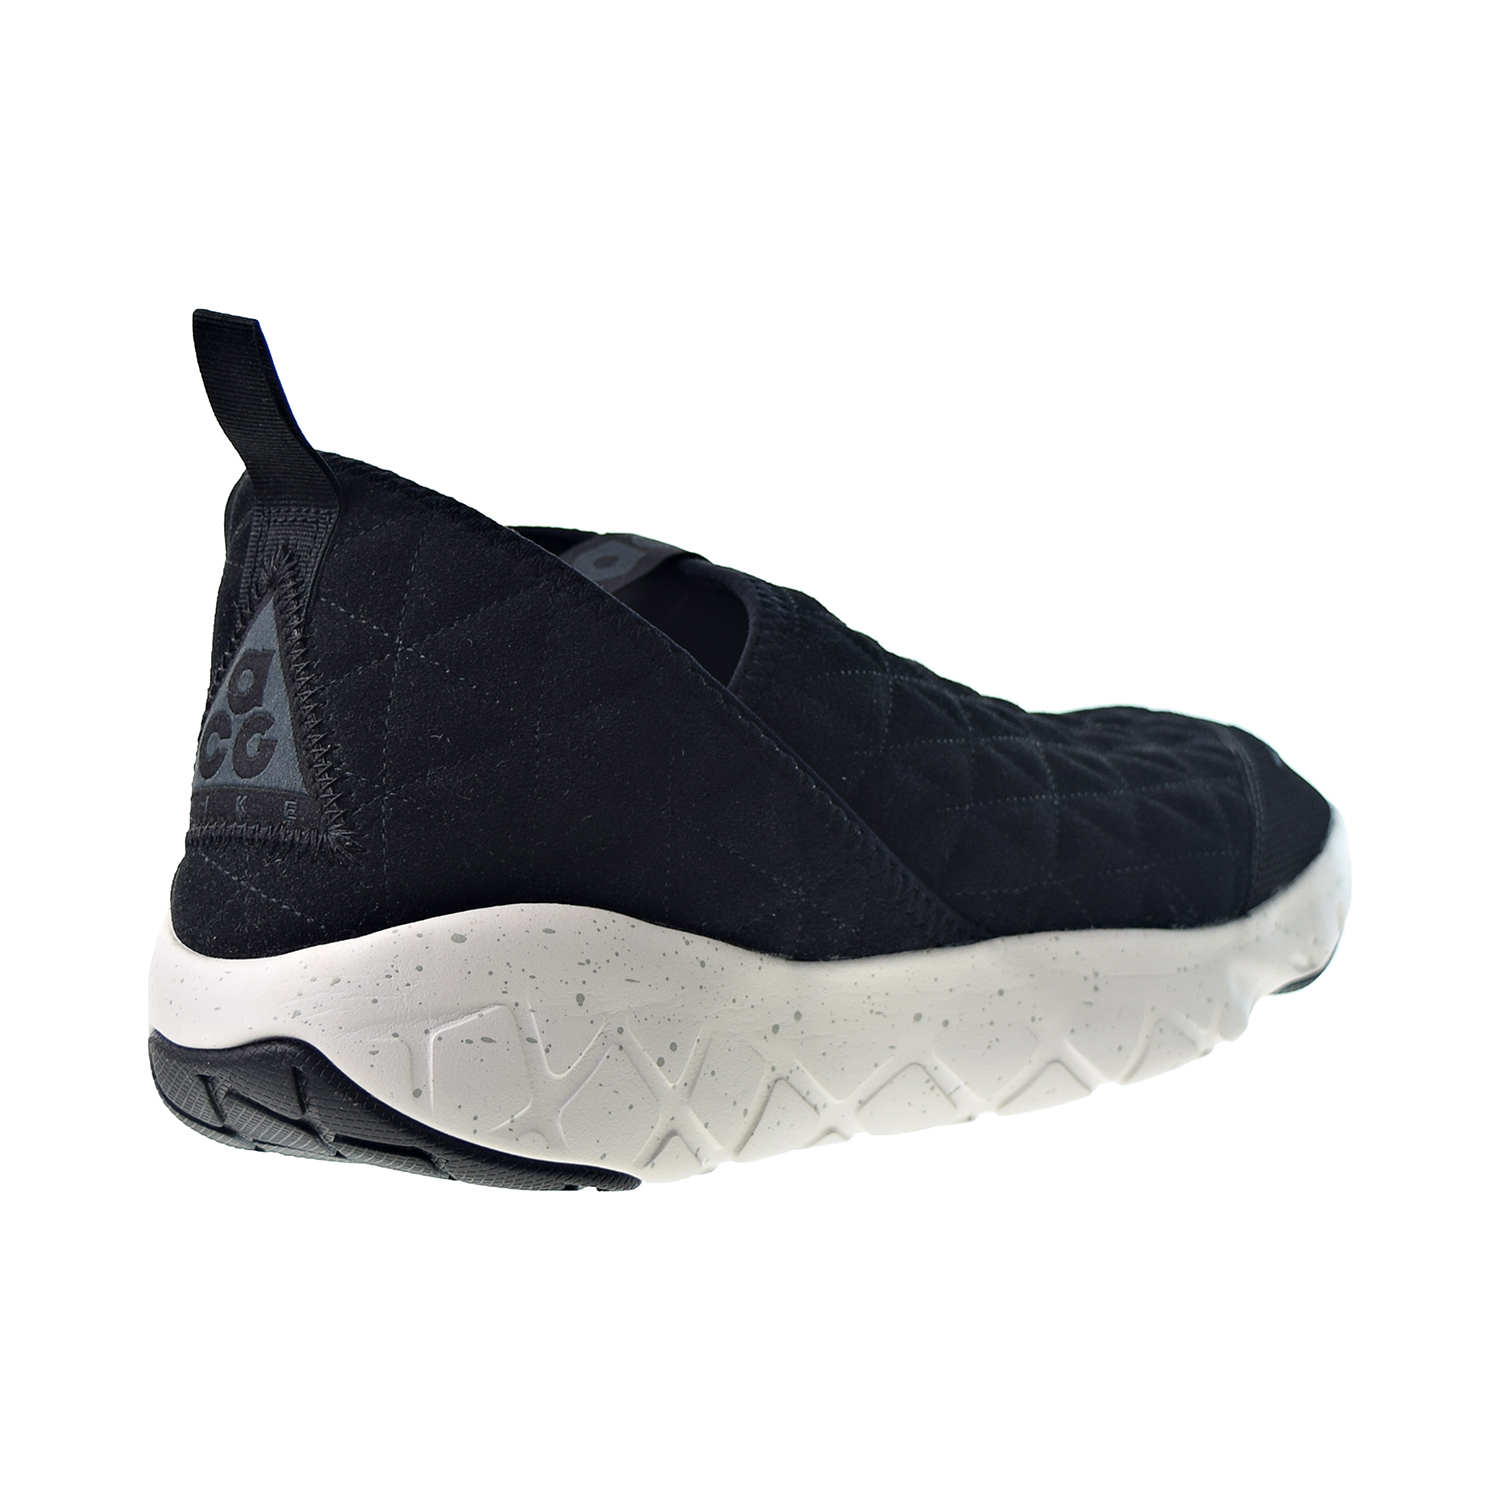 Nike ACG MOC 3.0 Leather Men's Shoes Black-Anthracite CT2896-001 | eBay